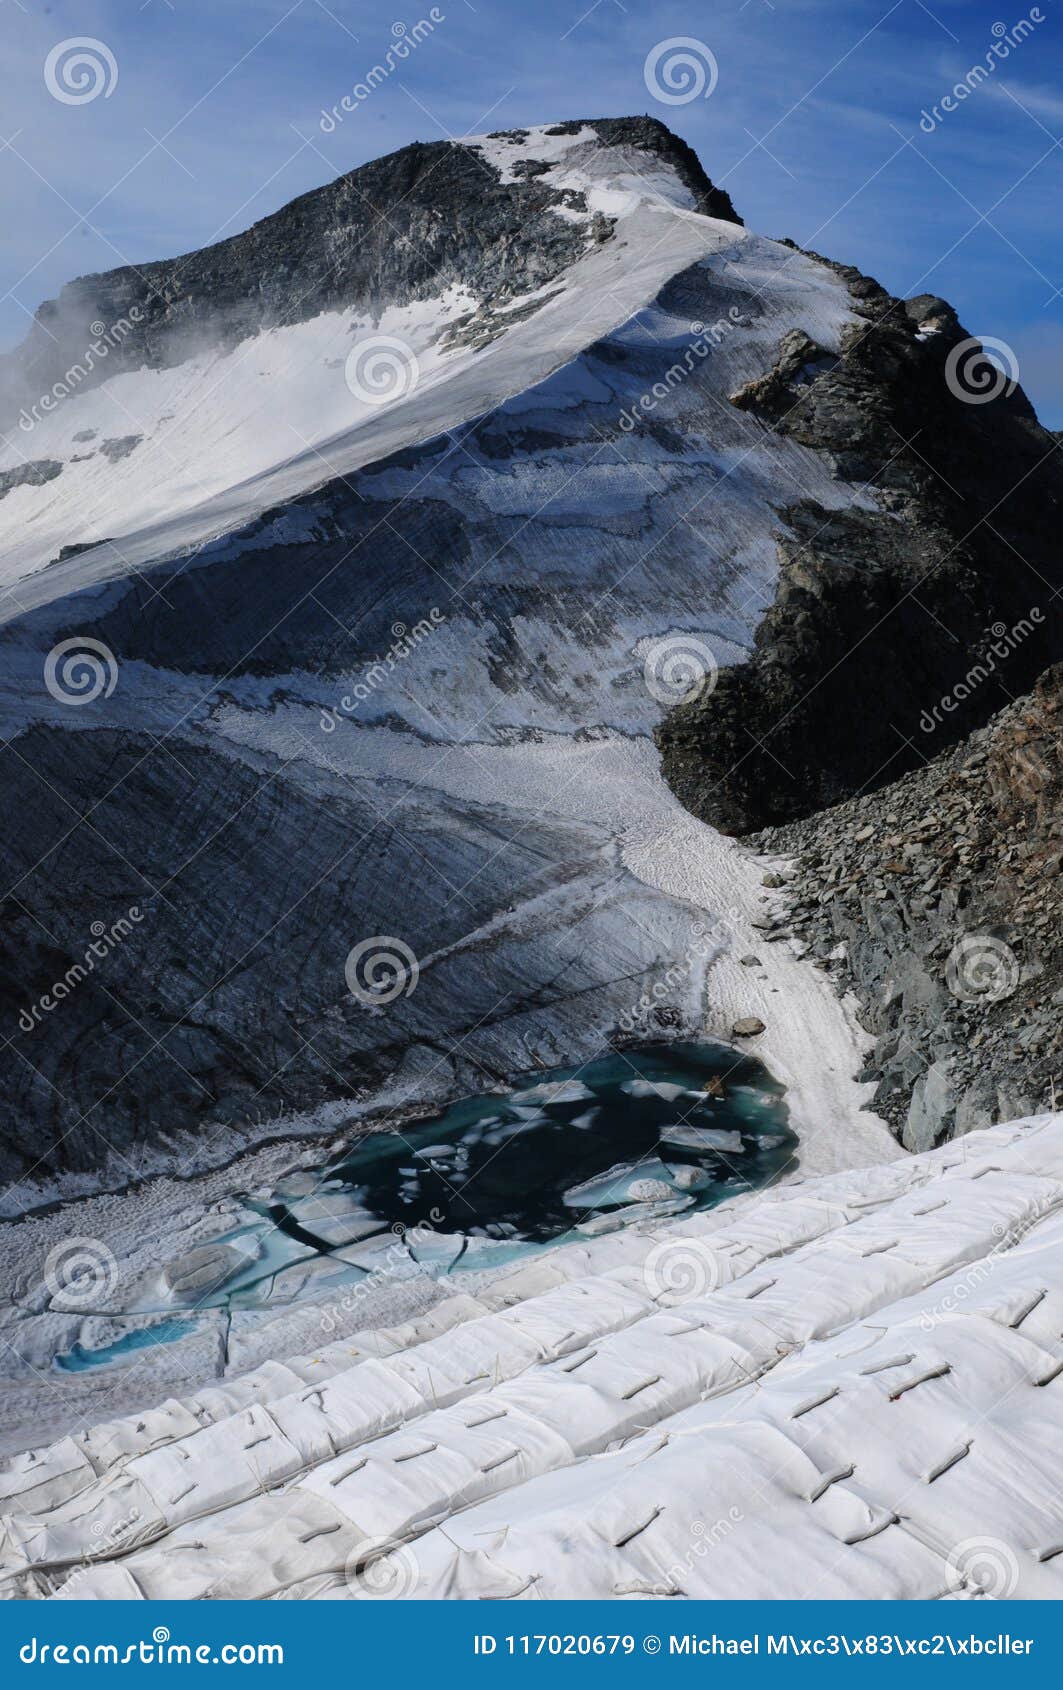 global clima change: melting piz corvatsch glacier in the upper